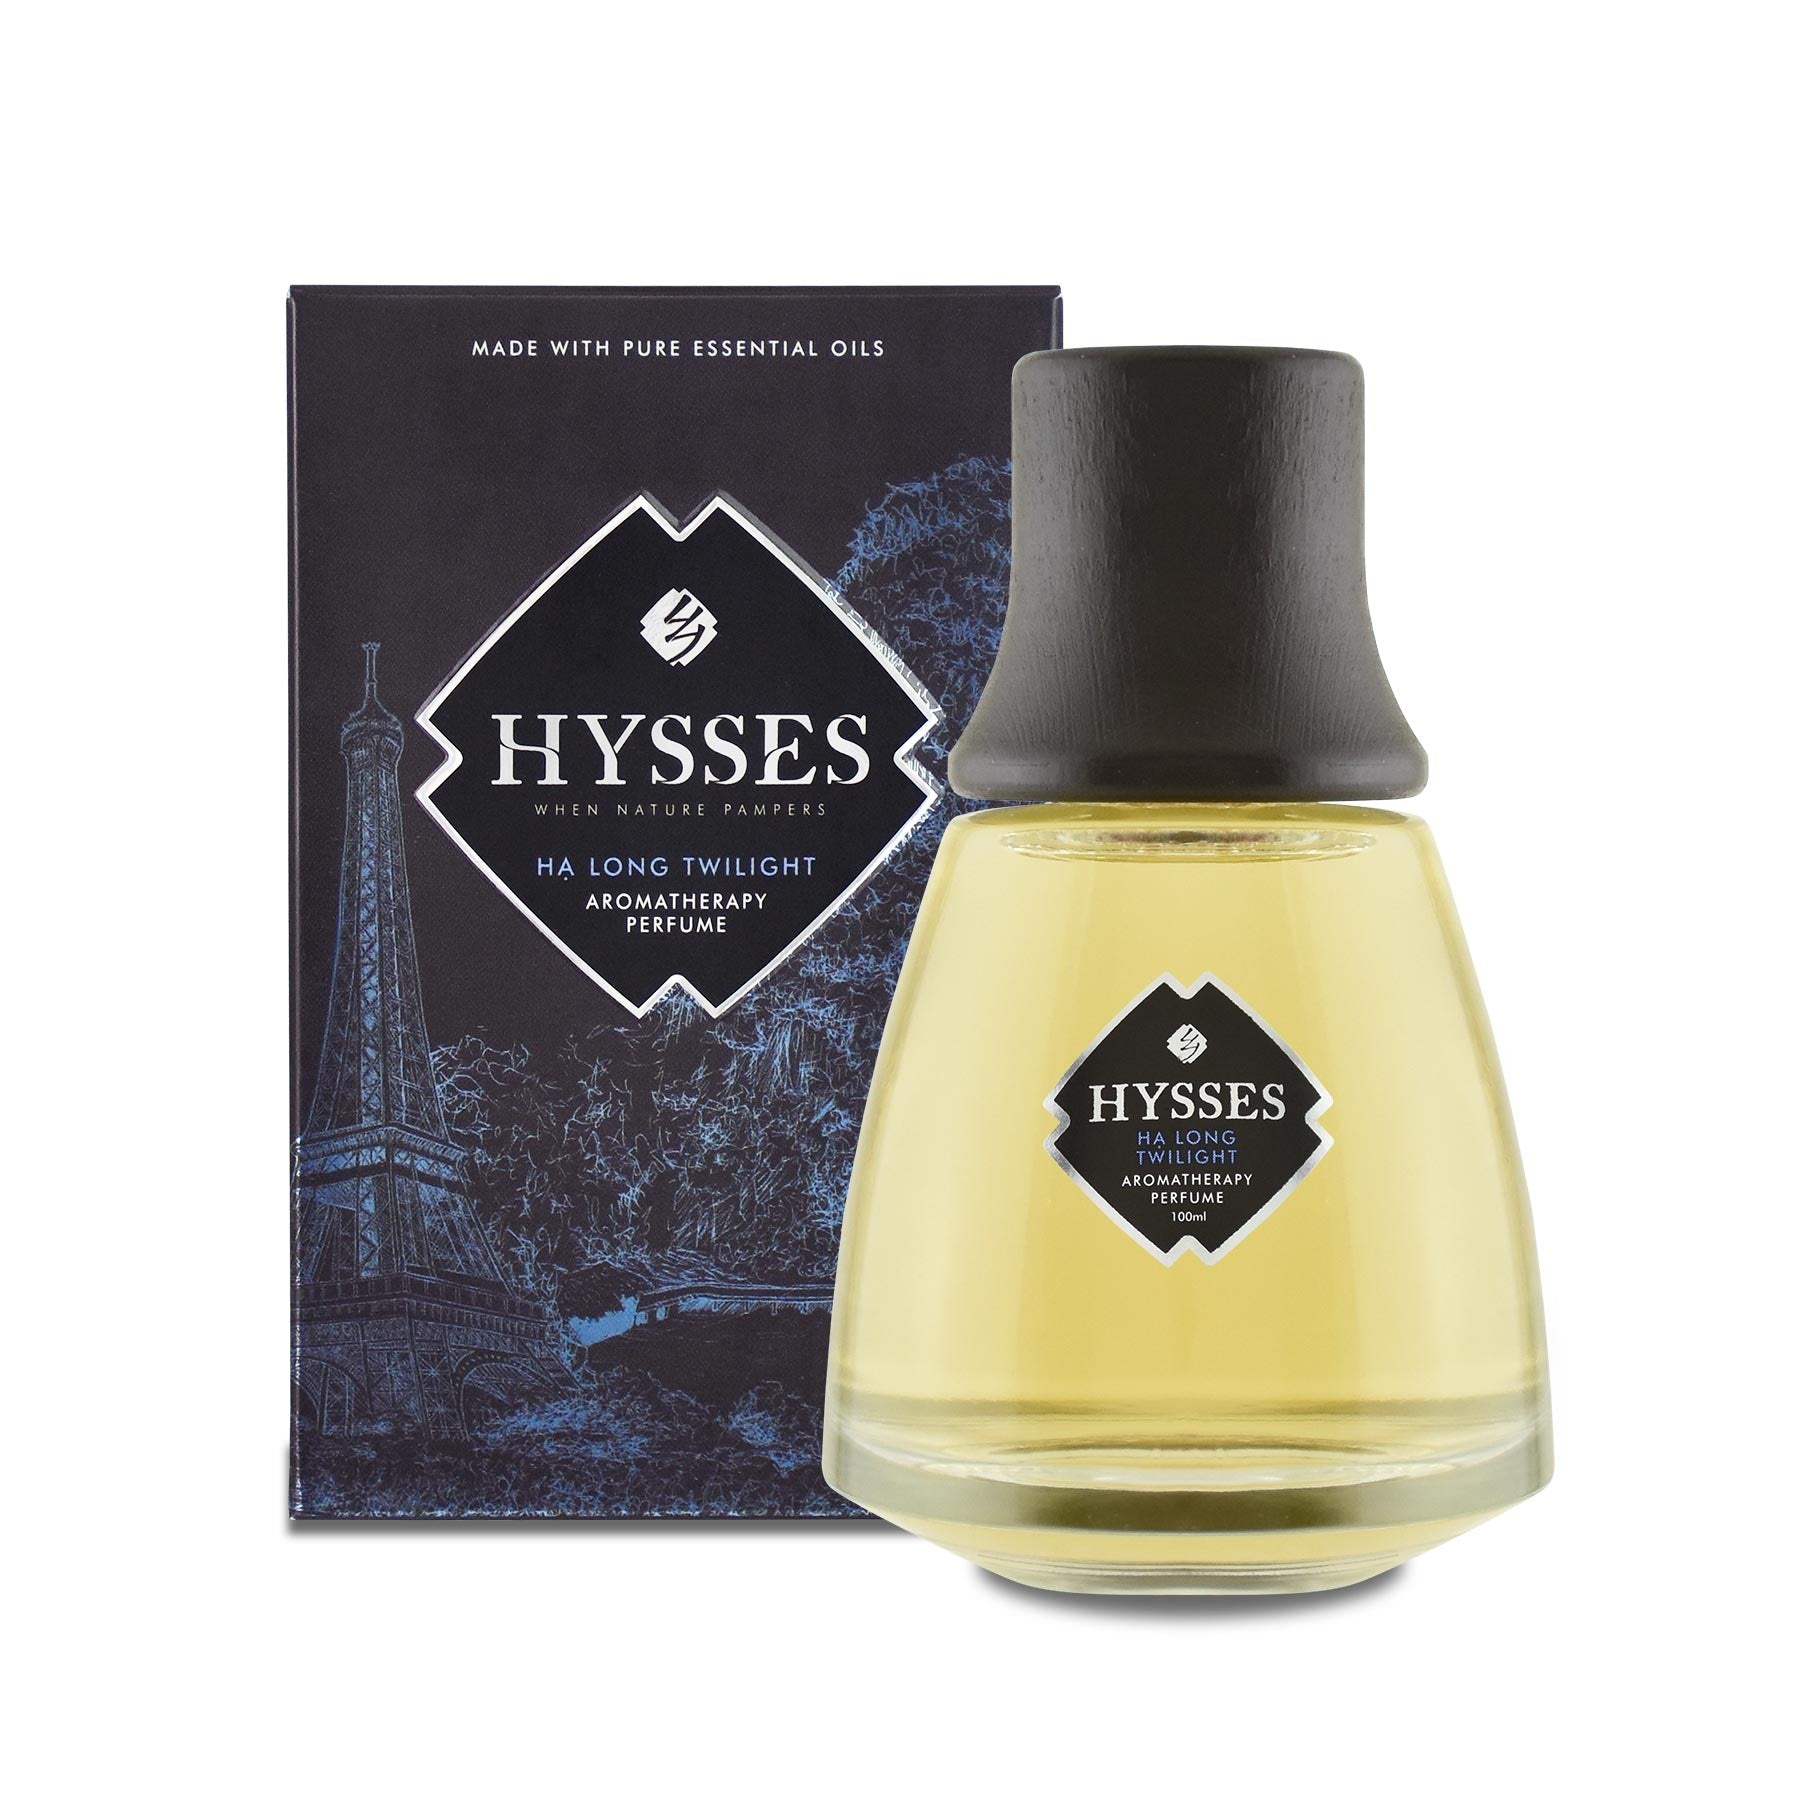 Ha Long Twilight Aromatherapy Perfume - HYSSES